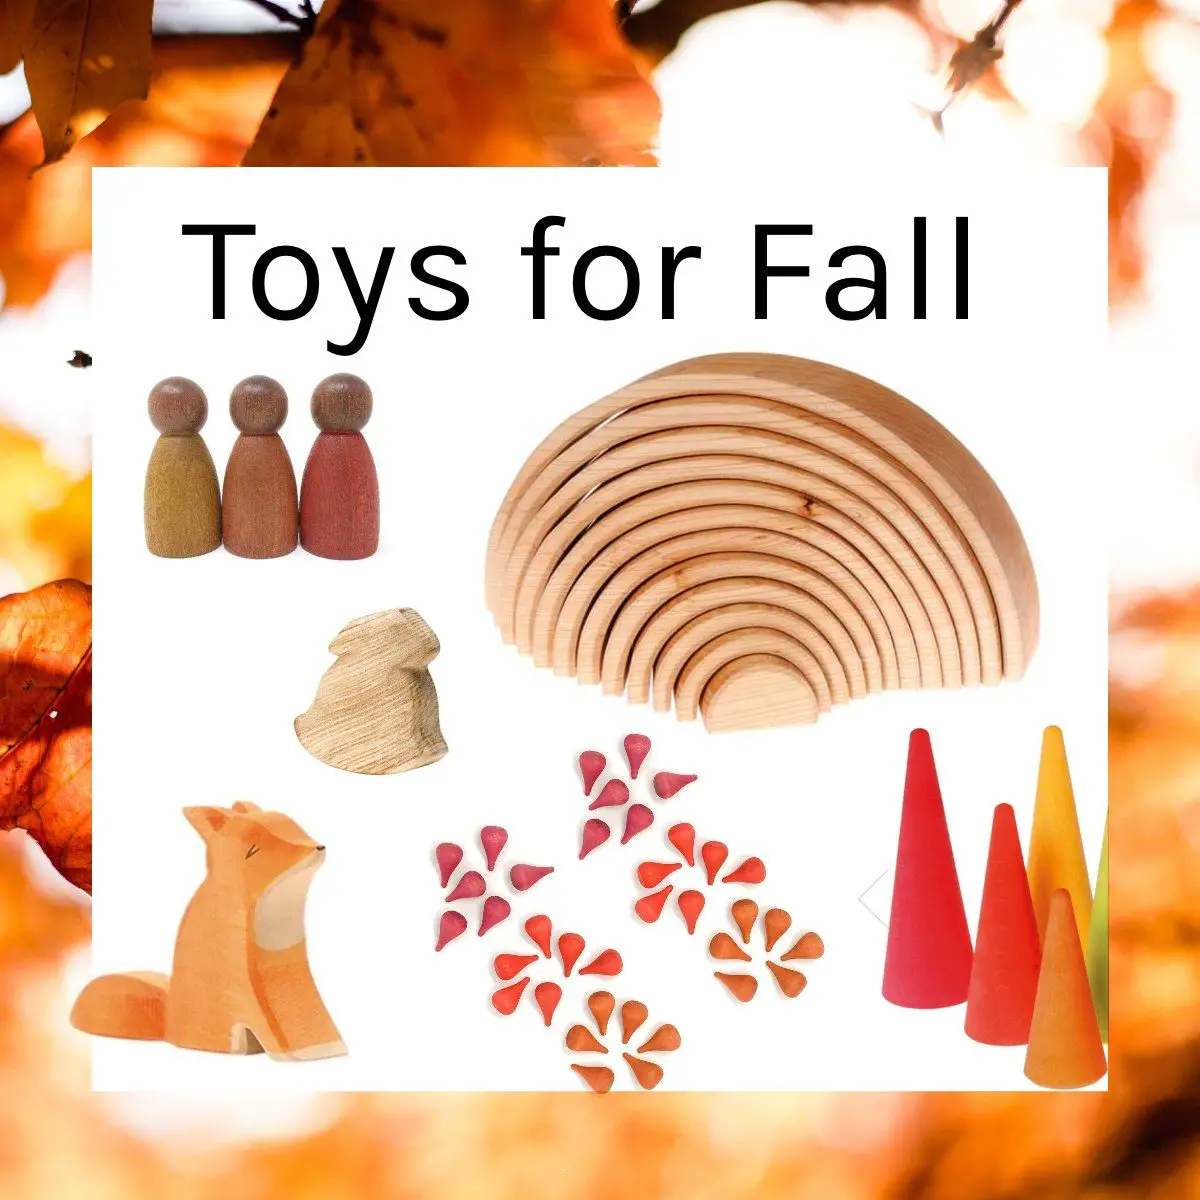 Toys for Fall 2019 | Non-Toxic Toys